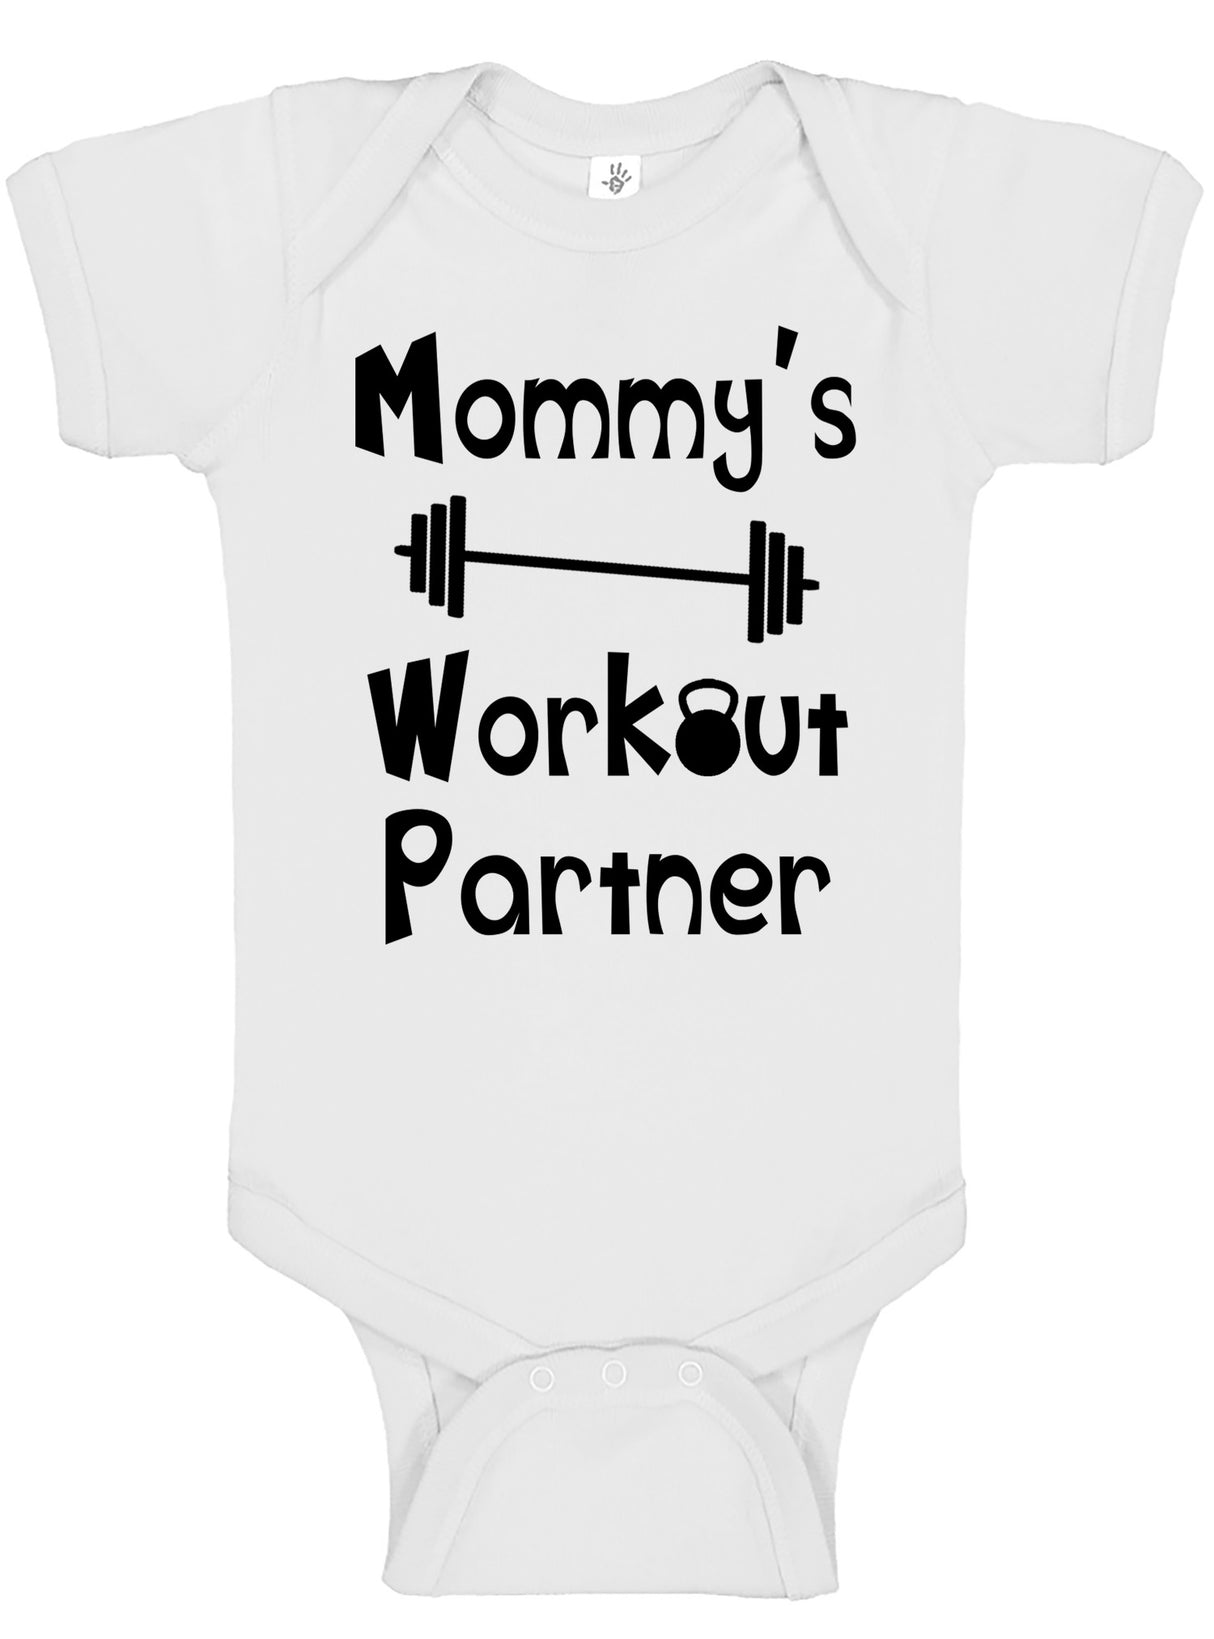 Mommy's Workout Partner Bodysuit - Aiden's Corner